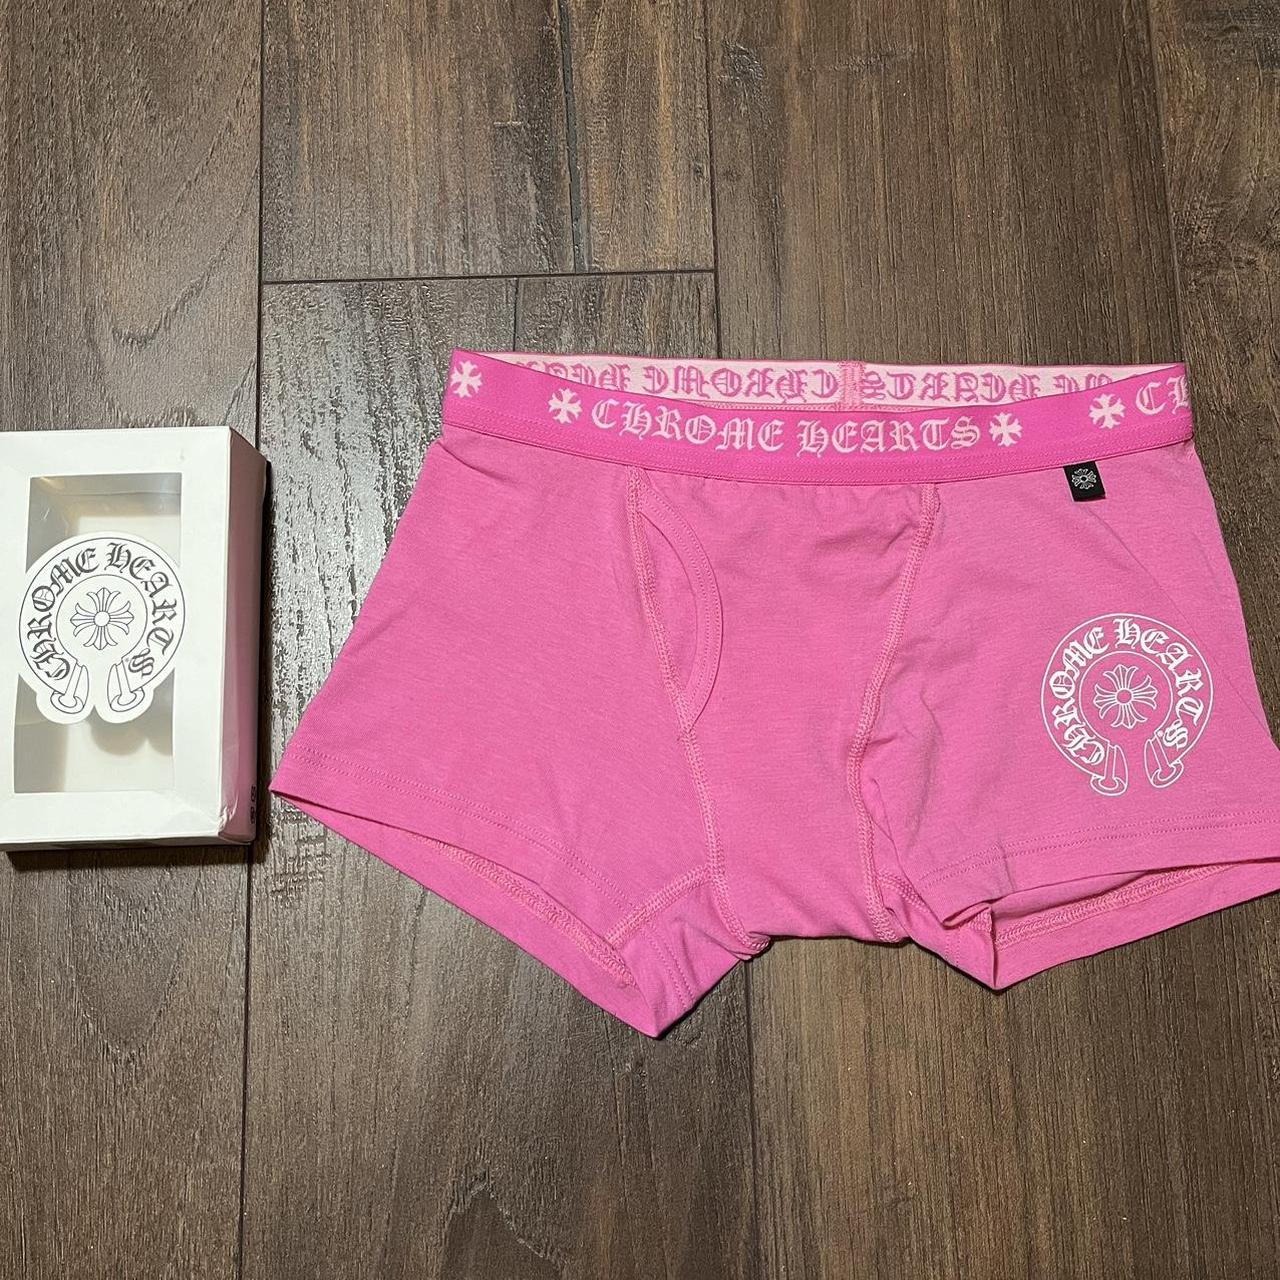 chrome hearts pink boxer shorts Chrome hearts women - Depop